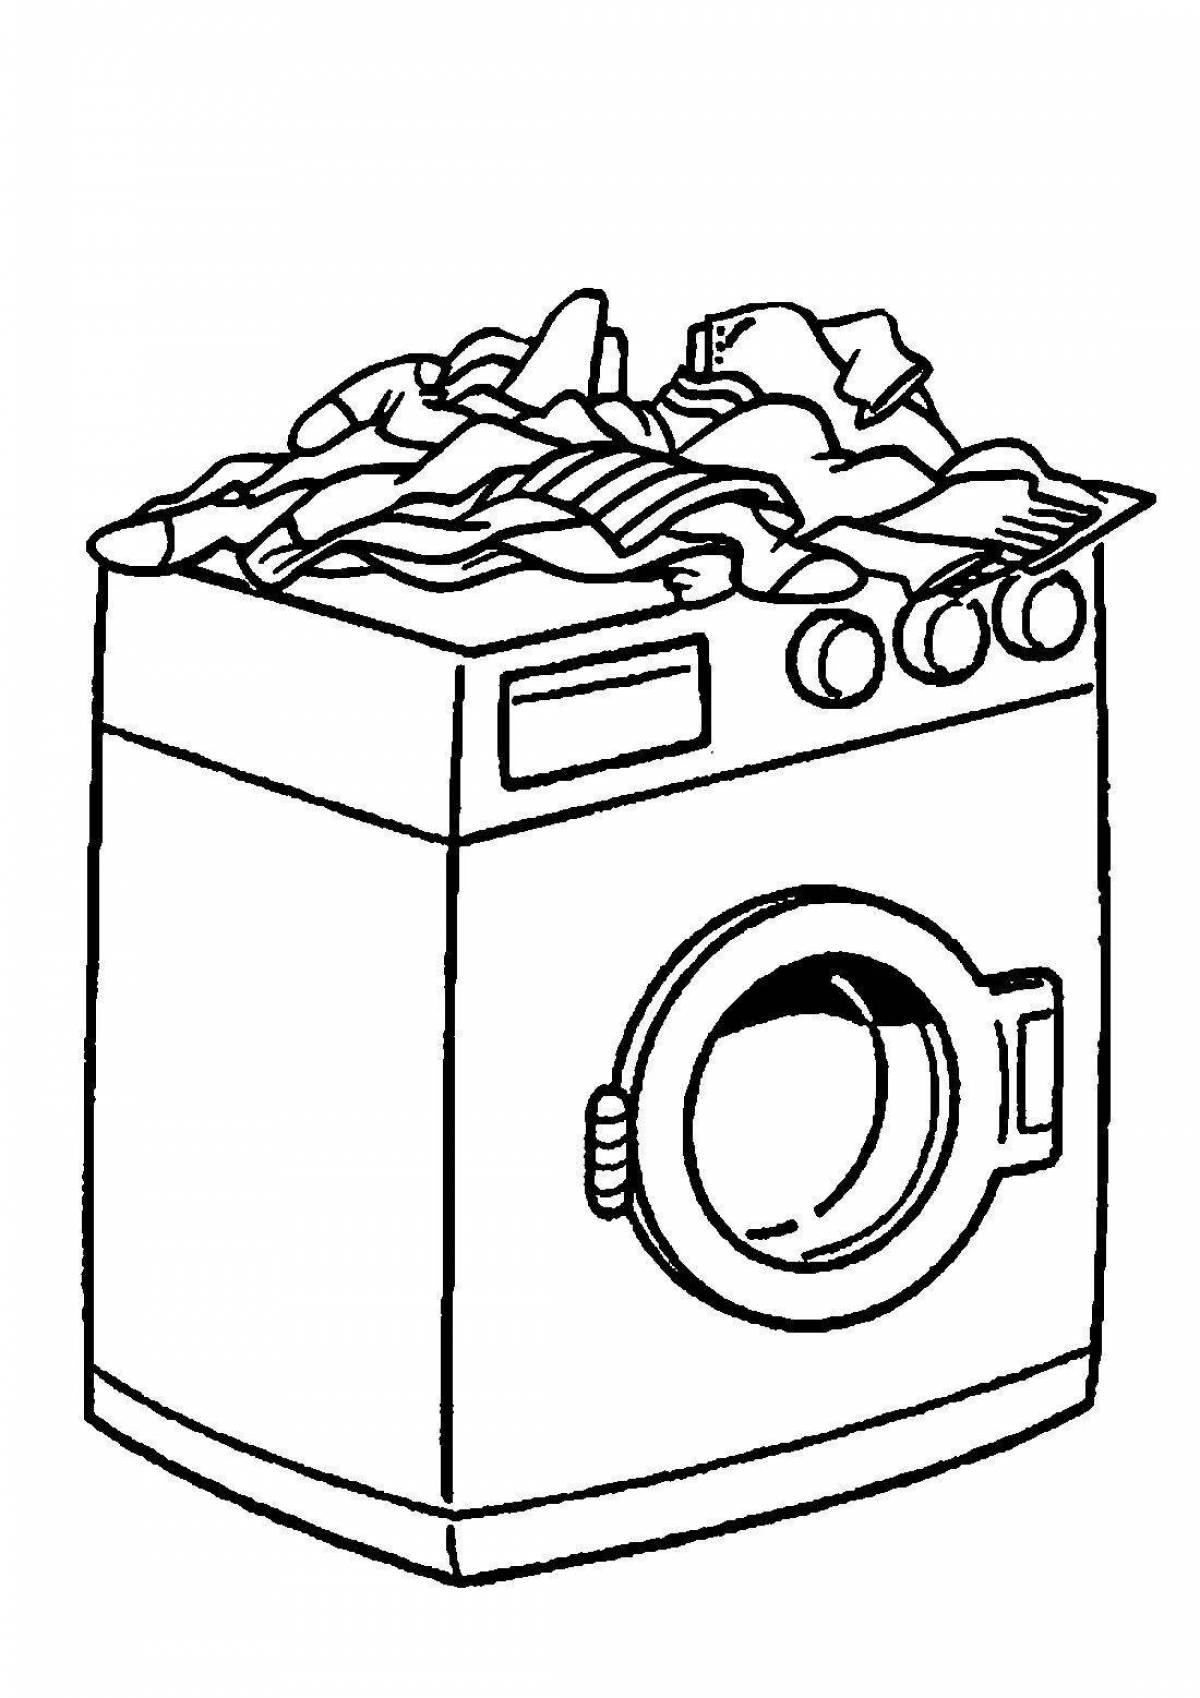 A fun washing machine coloring book for kids